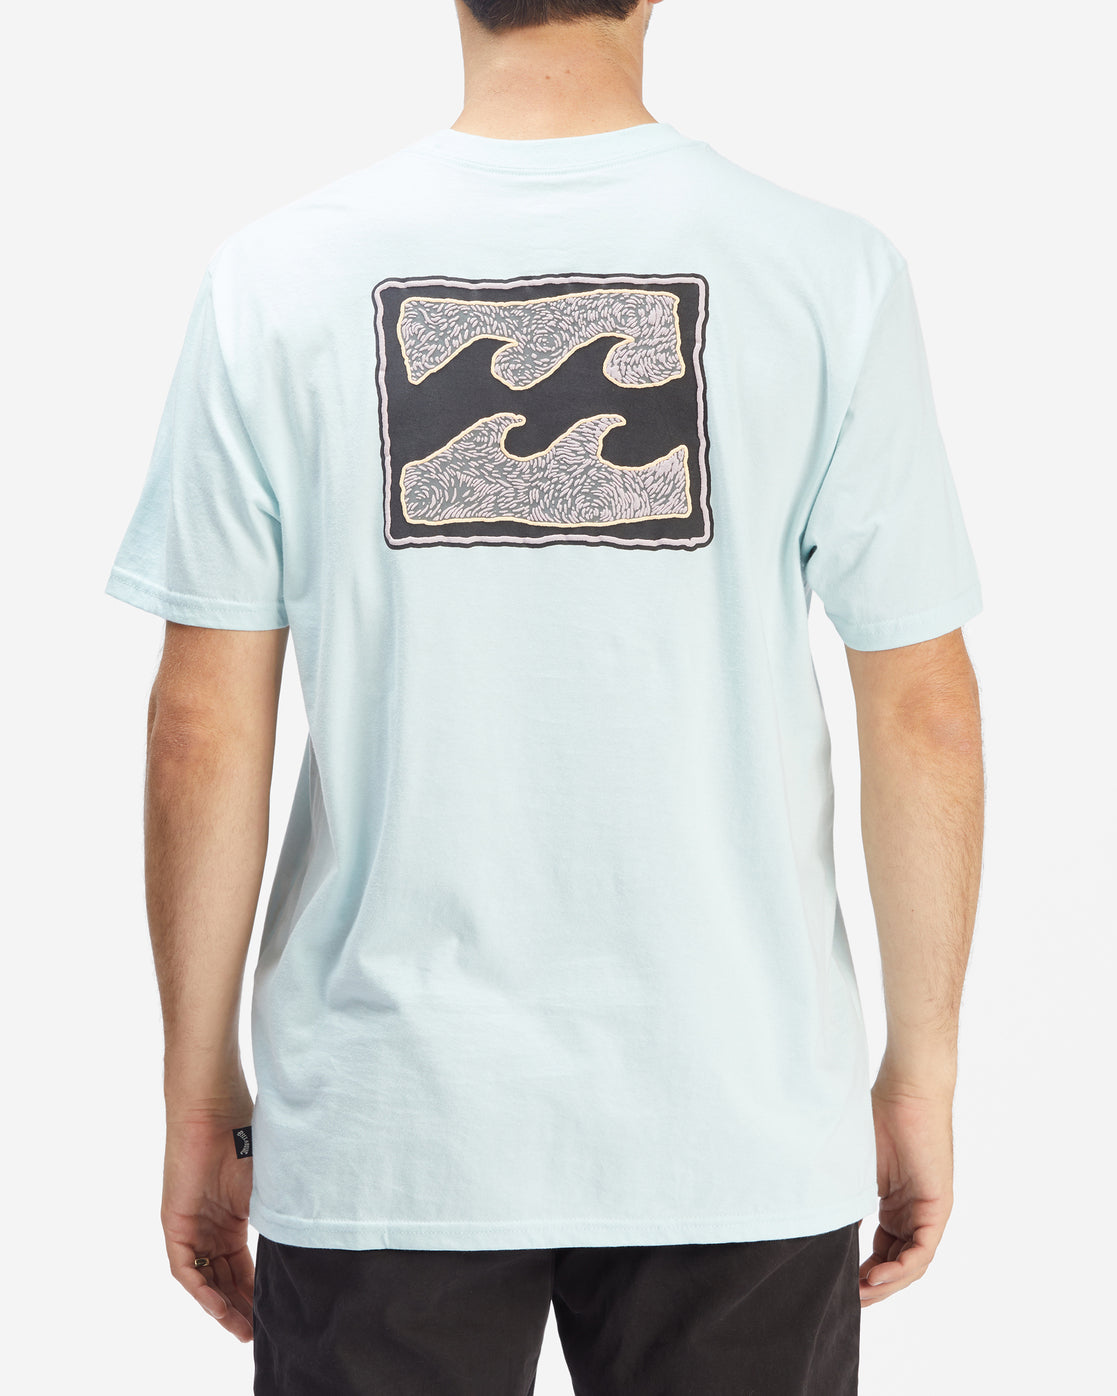 Crayon Wave Short Sleeve T-Shirt - ABYZT00875